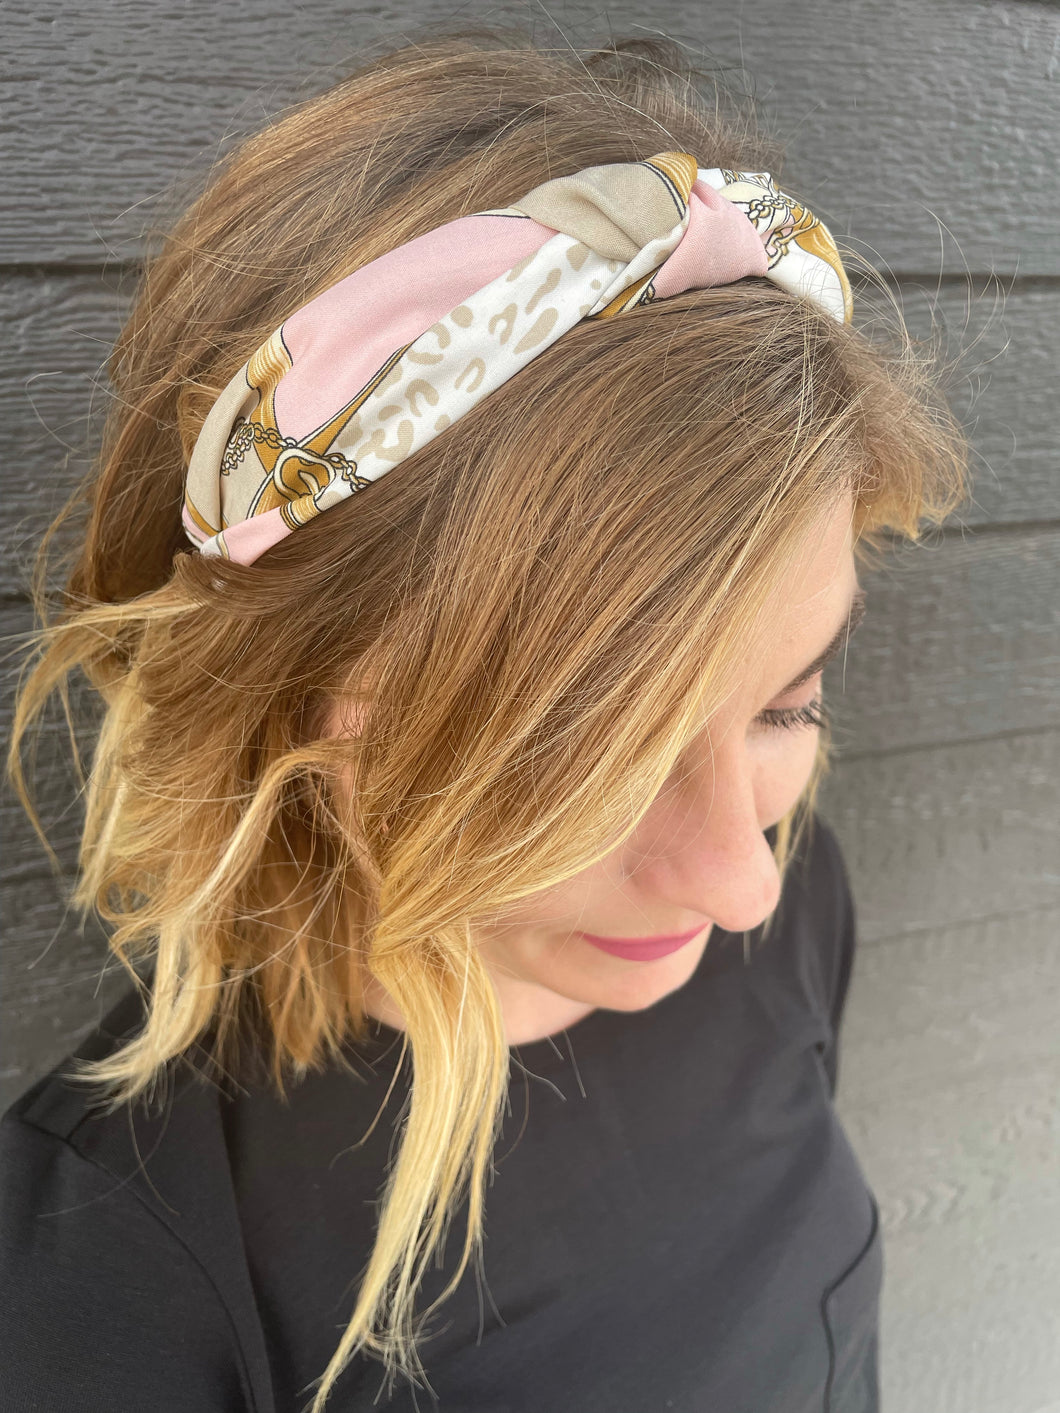 Blondie girl headband